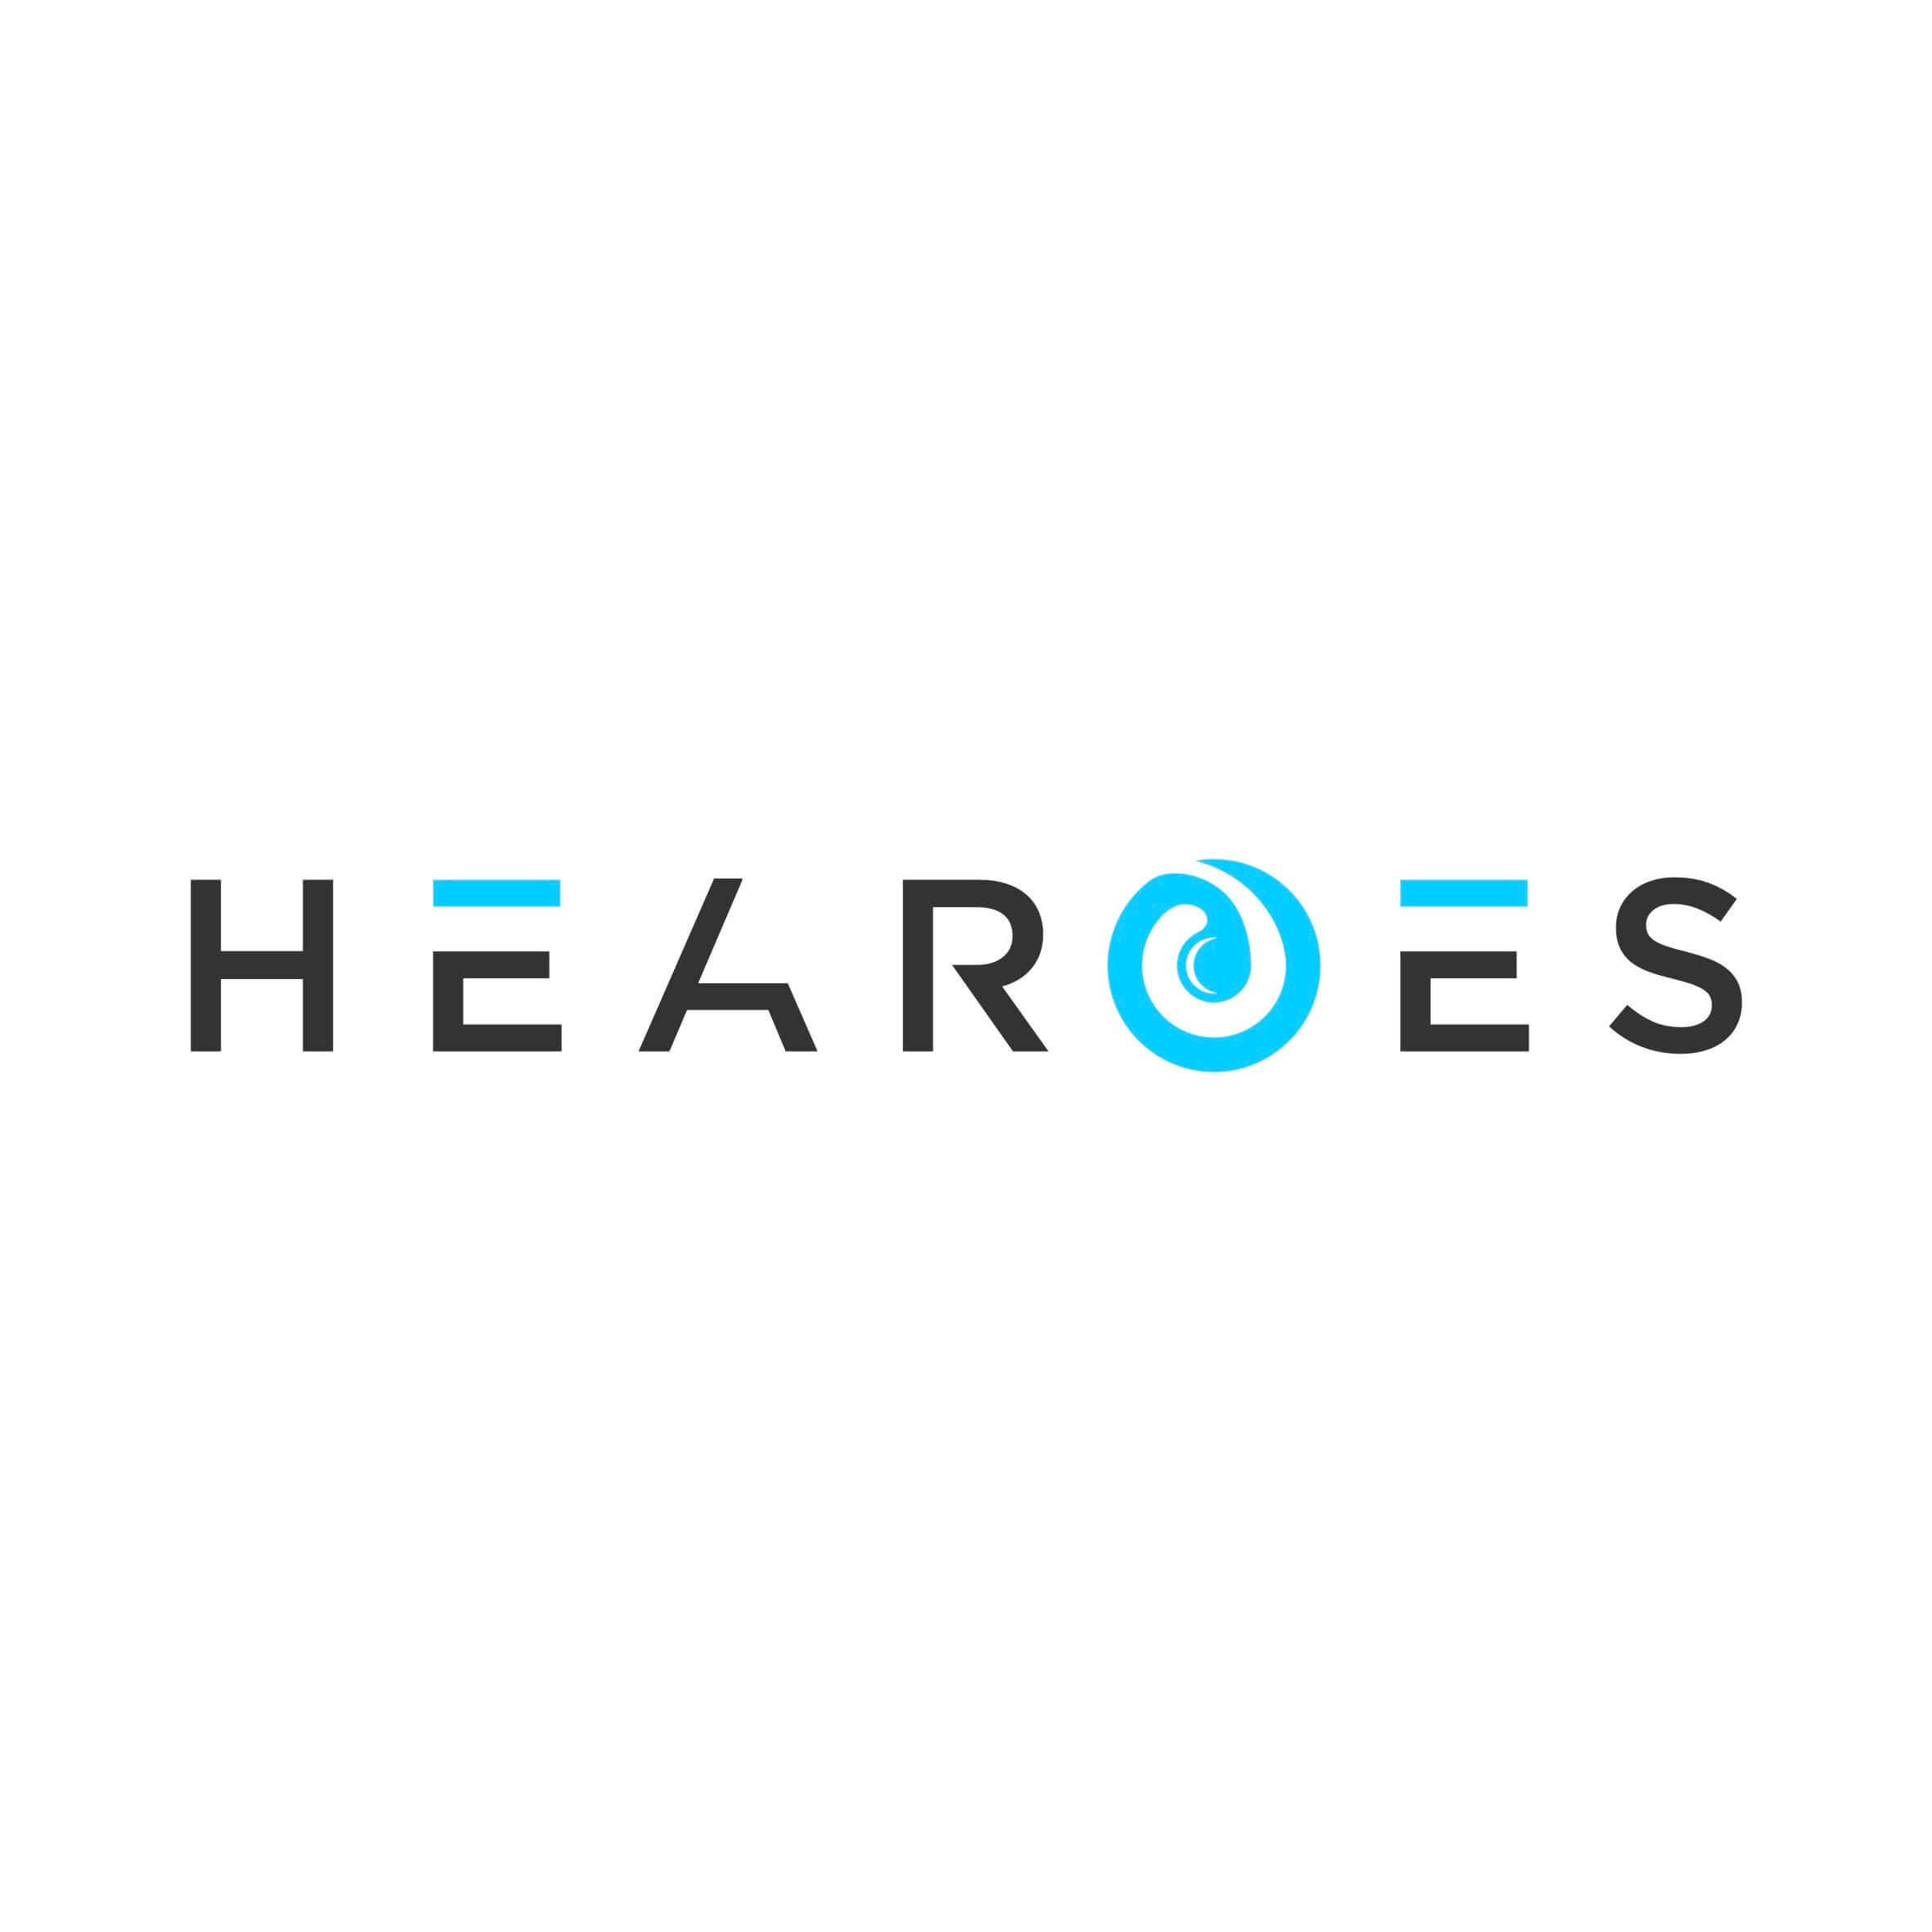 Hearoes